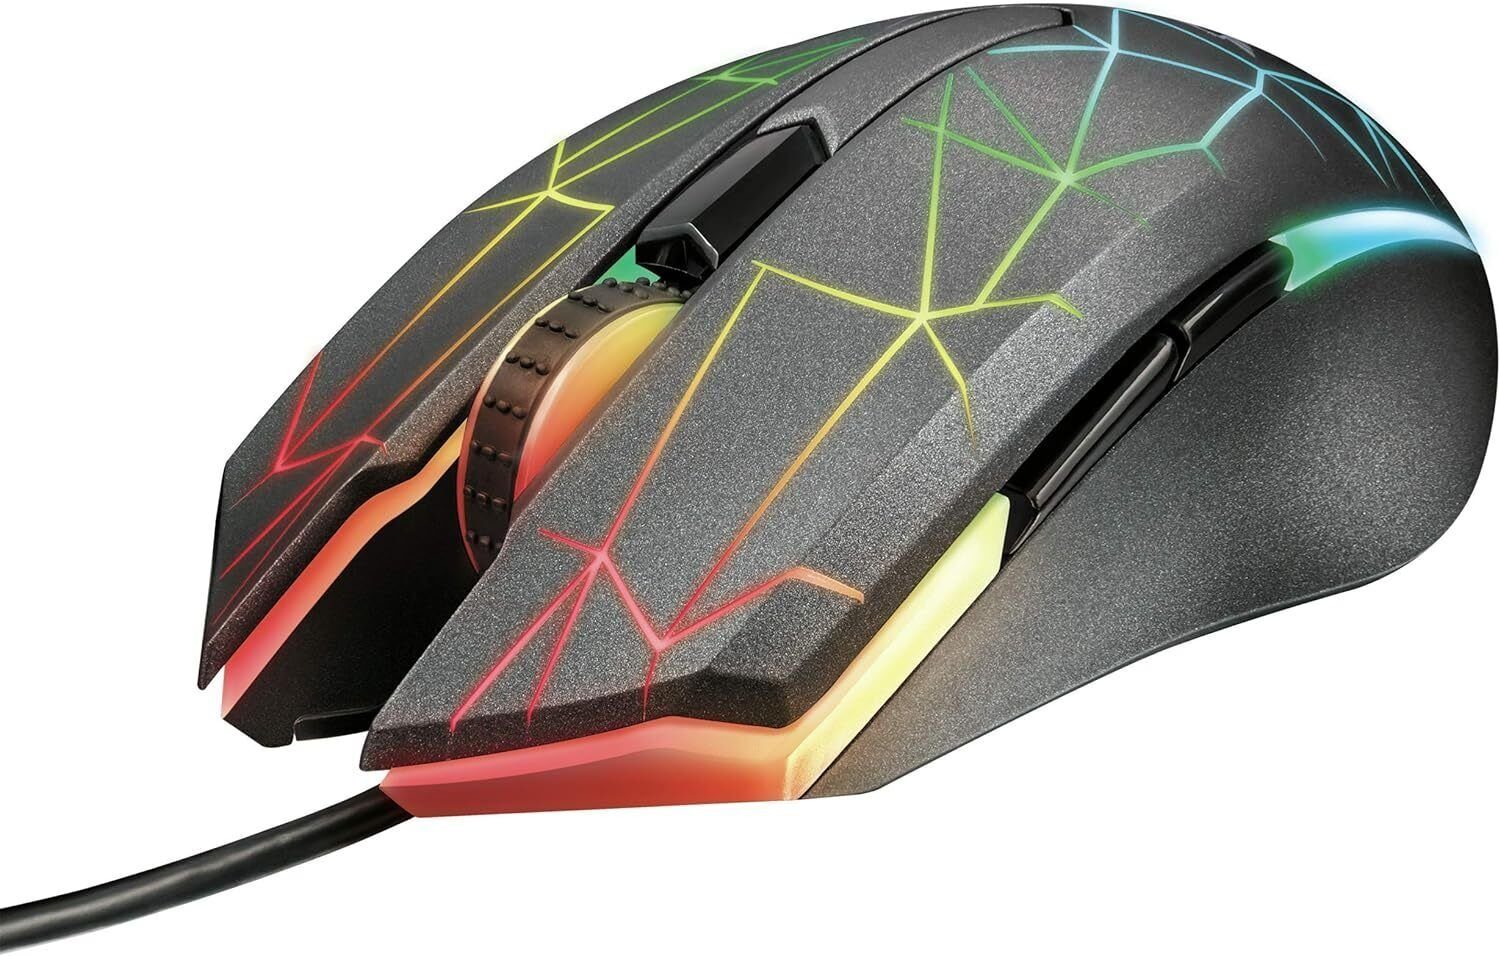 Trust Gaming Heron GXT 170 RGB LED-Beleuchtung Mouse Optical Sensor Gaming-Maus (Einstellbare, volle RGB LED-Beleuchtung (mit Regenbogen-Wellen-Effekt)